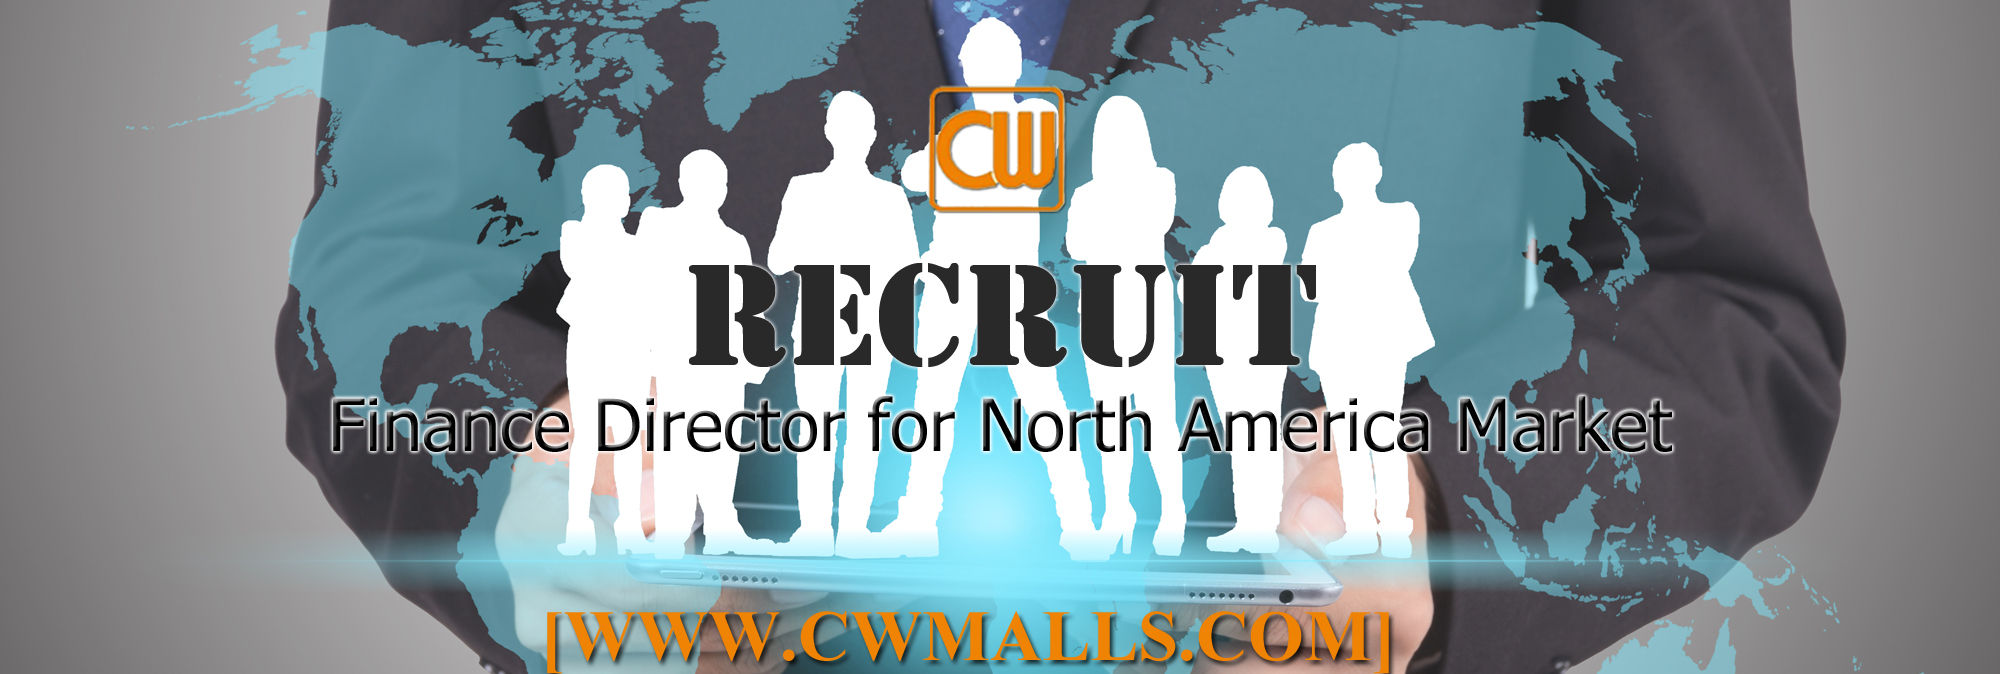 Recruit Network Finance Director for North America Market